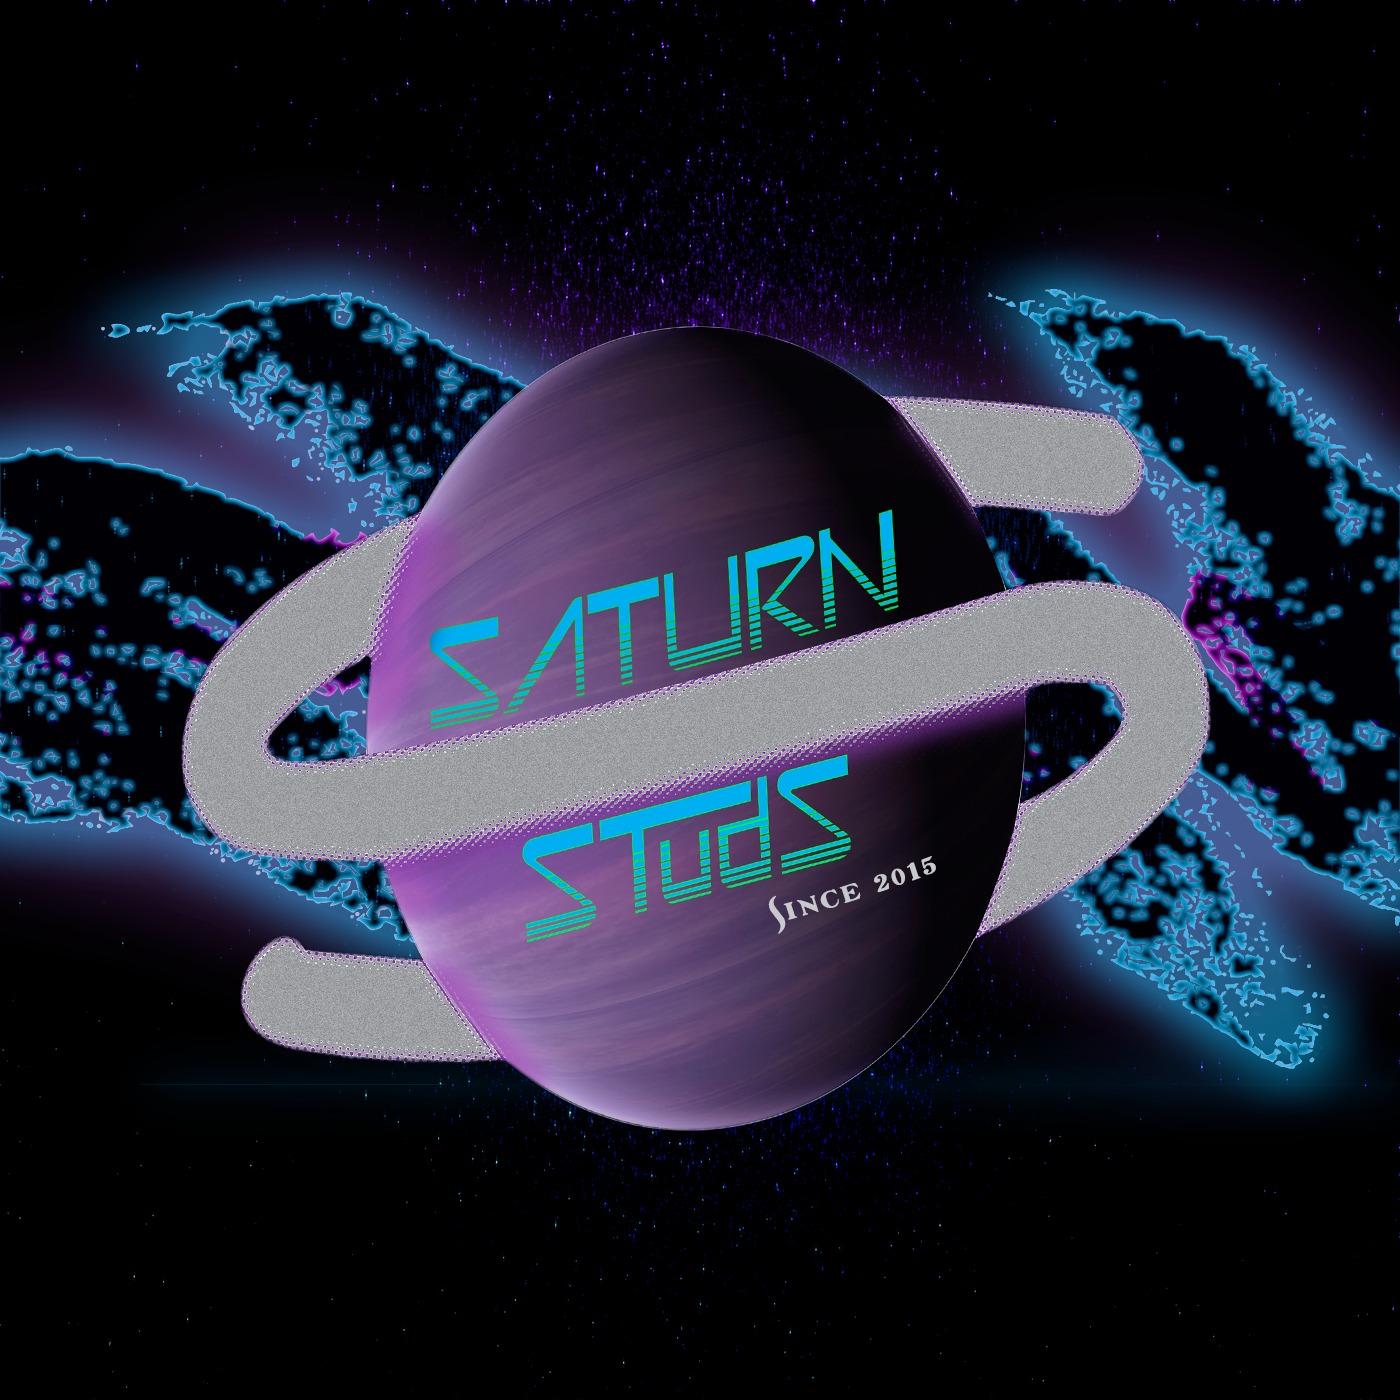 The Saturn Studs Podcast